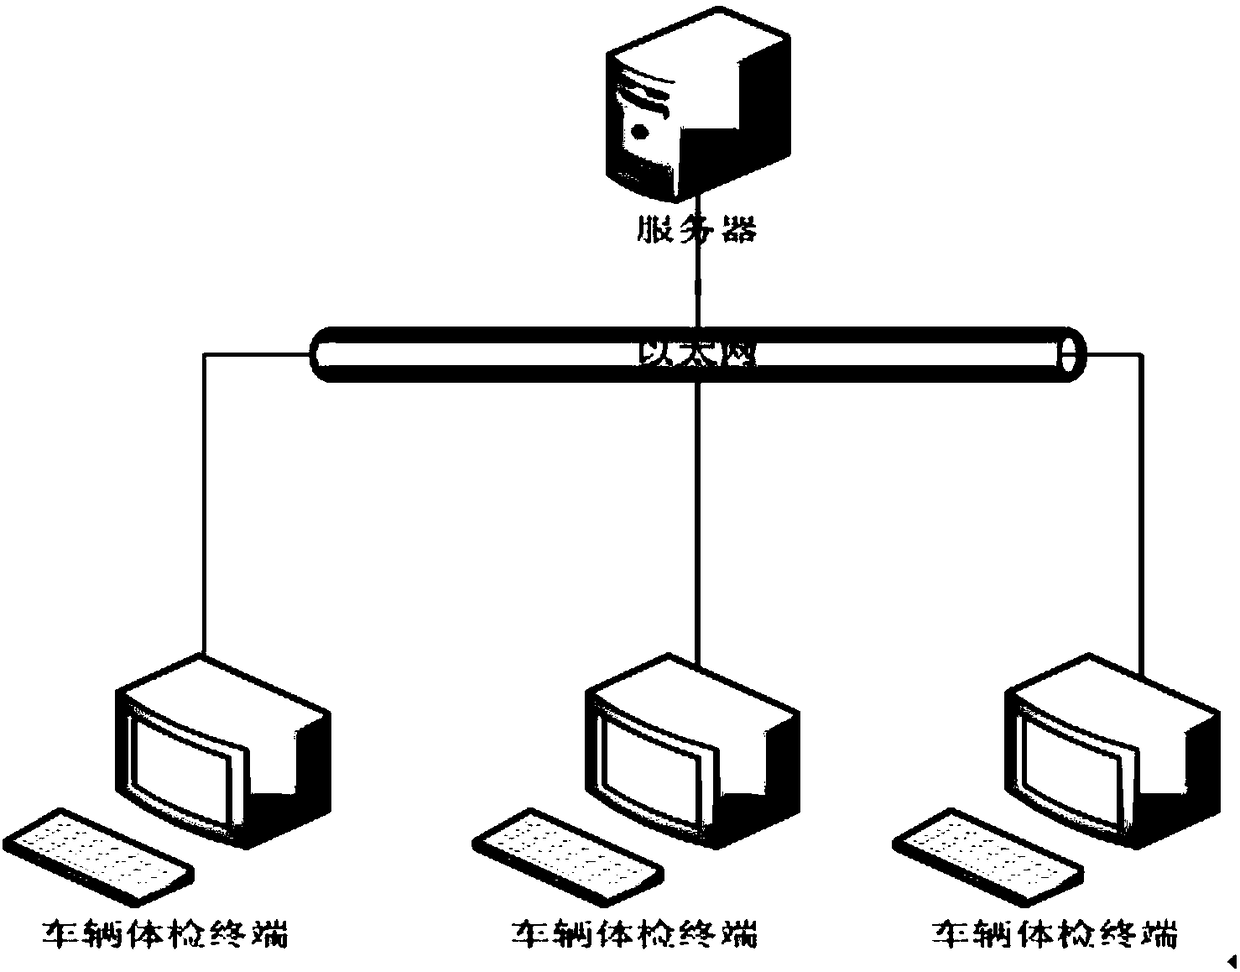 Vehicle diagnosis method, terminal device, and computer readable storage medium